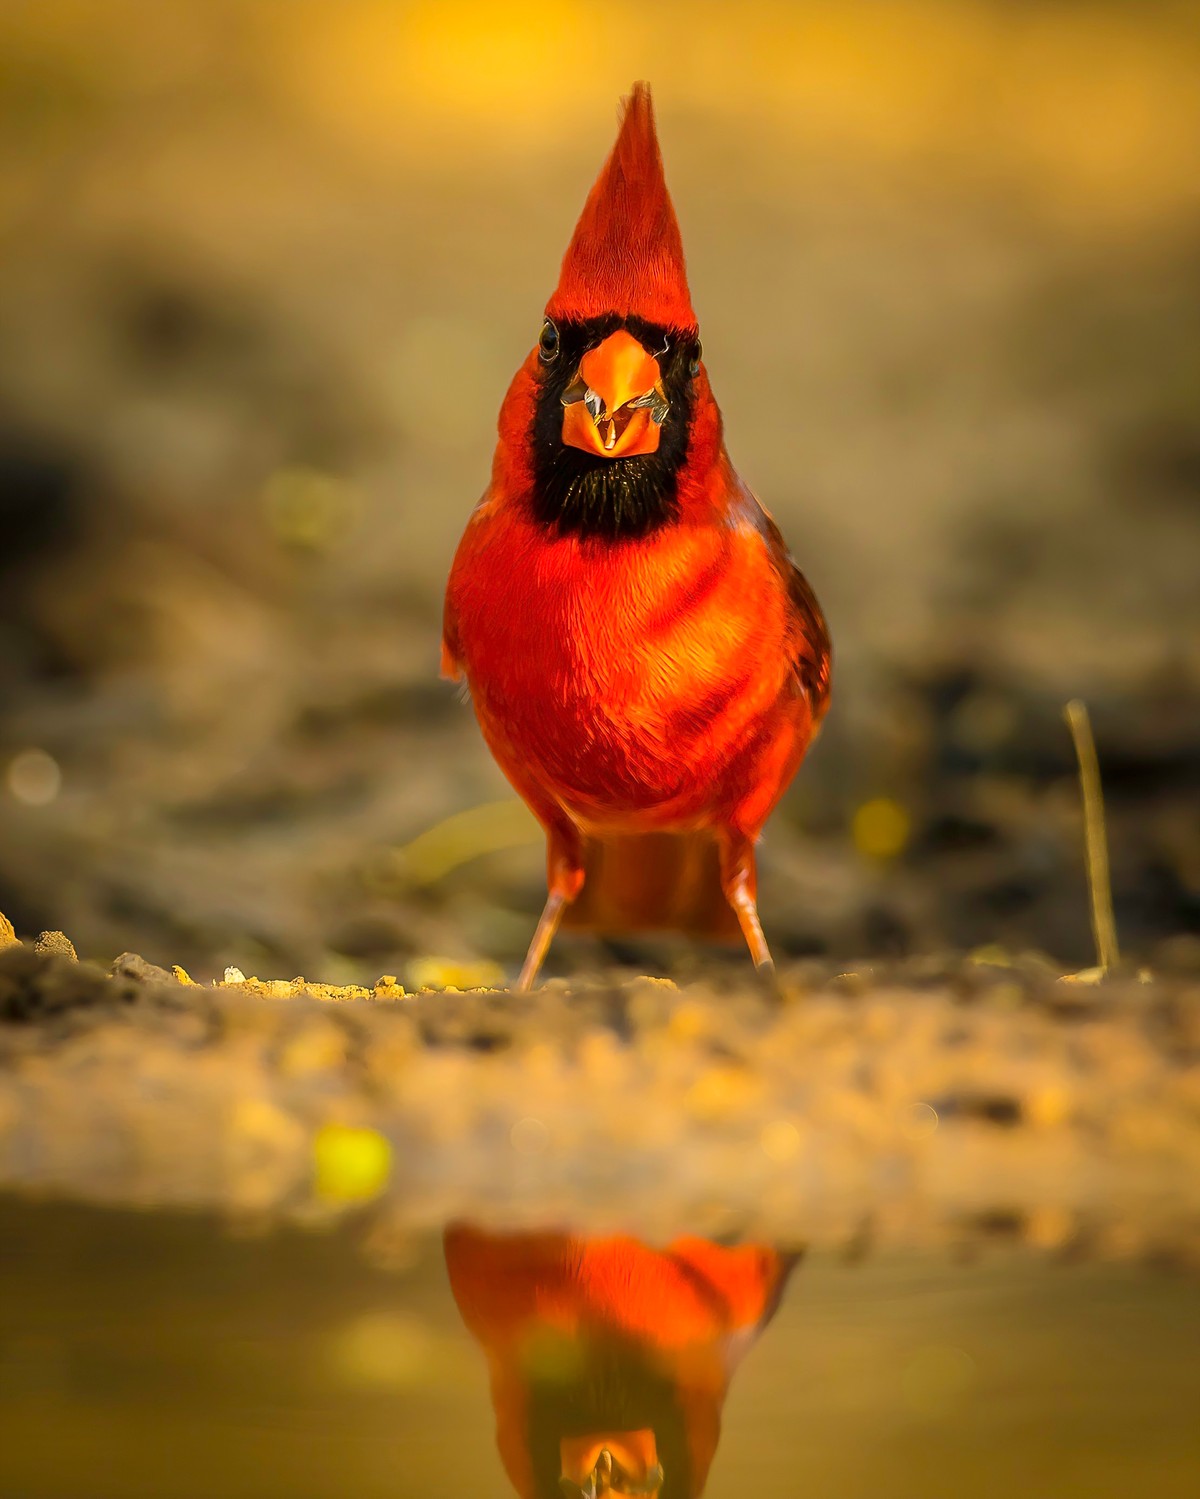 Northern Cardinal at Water-denoise-sharpen-sharpen - Copy.jpg